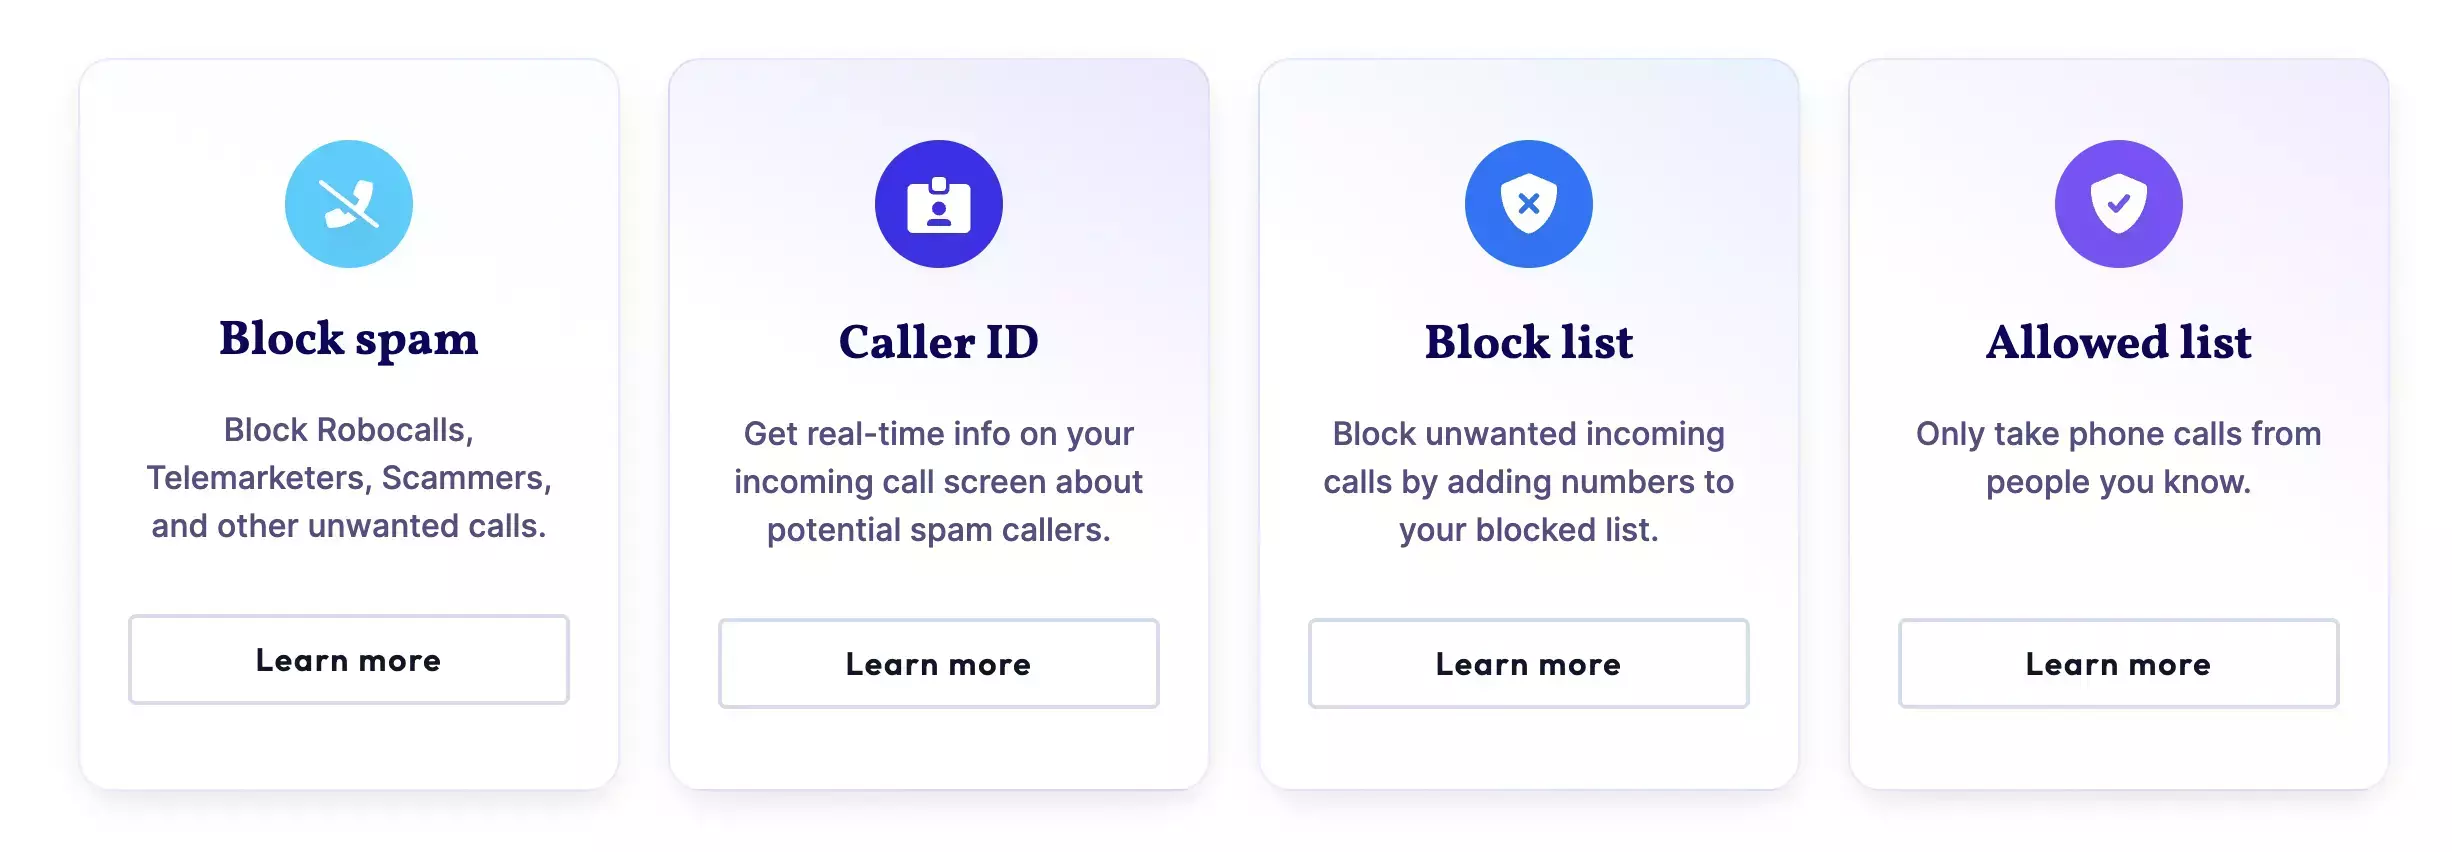 An image of Community Phone landline spam call blocker feature